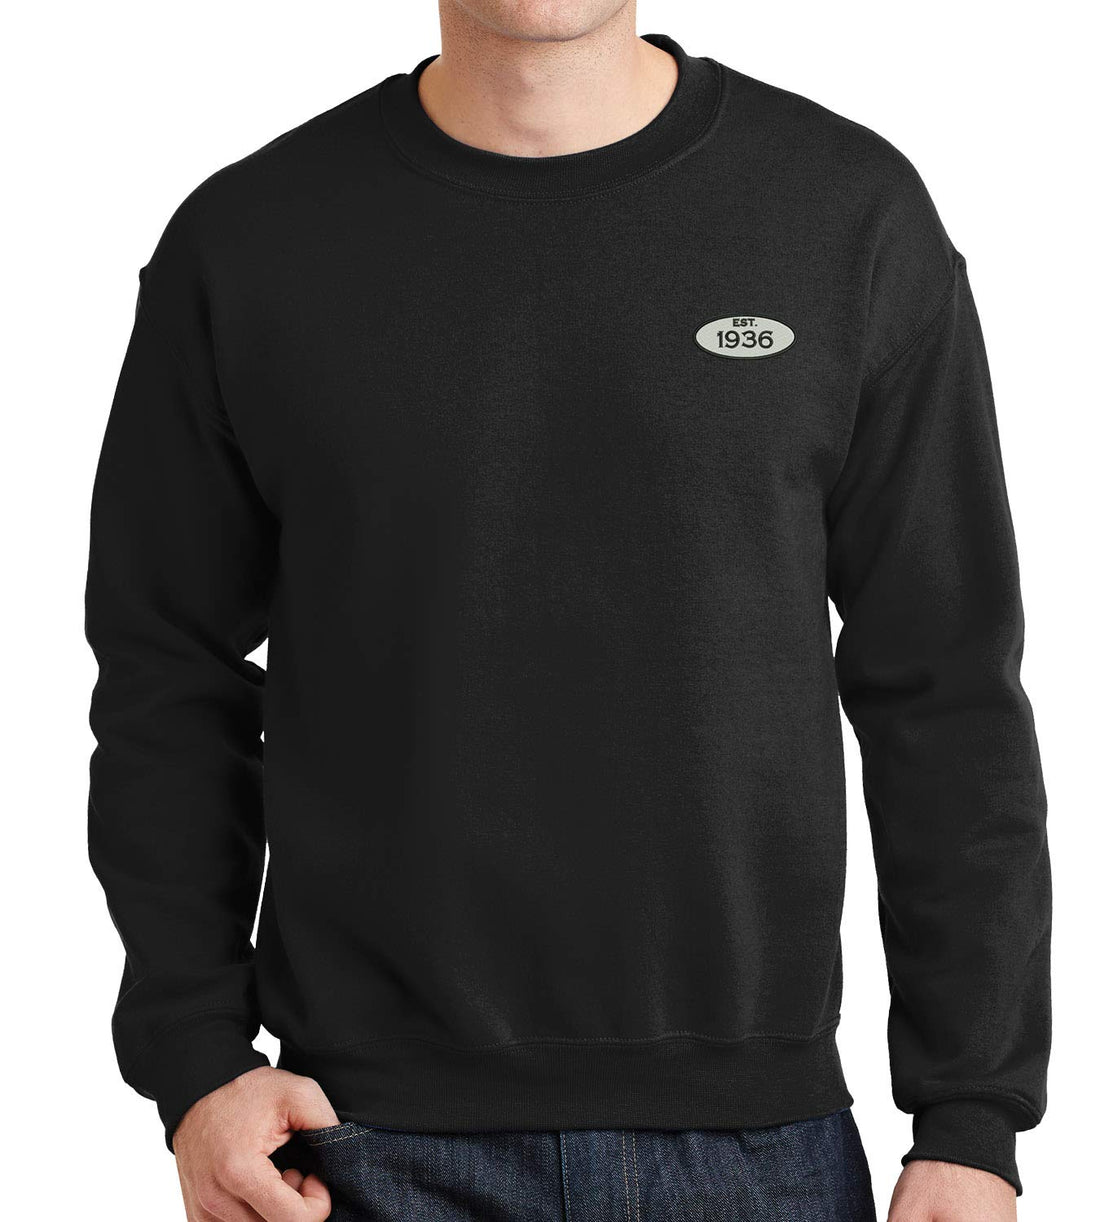 Trendy Apparel Shop Established 1936 Embroidered Crewneck Sweatshirt - Black - Small